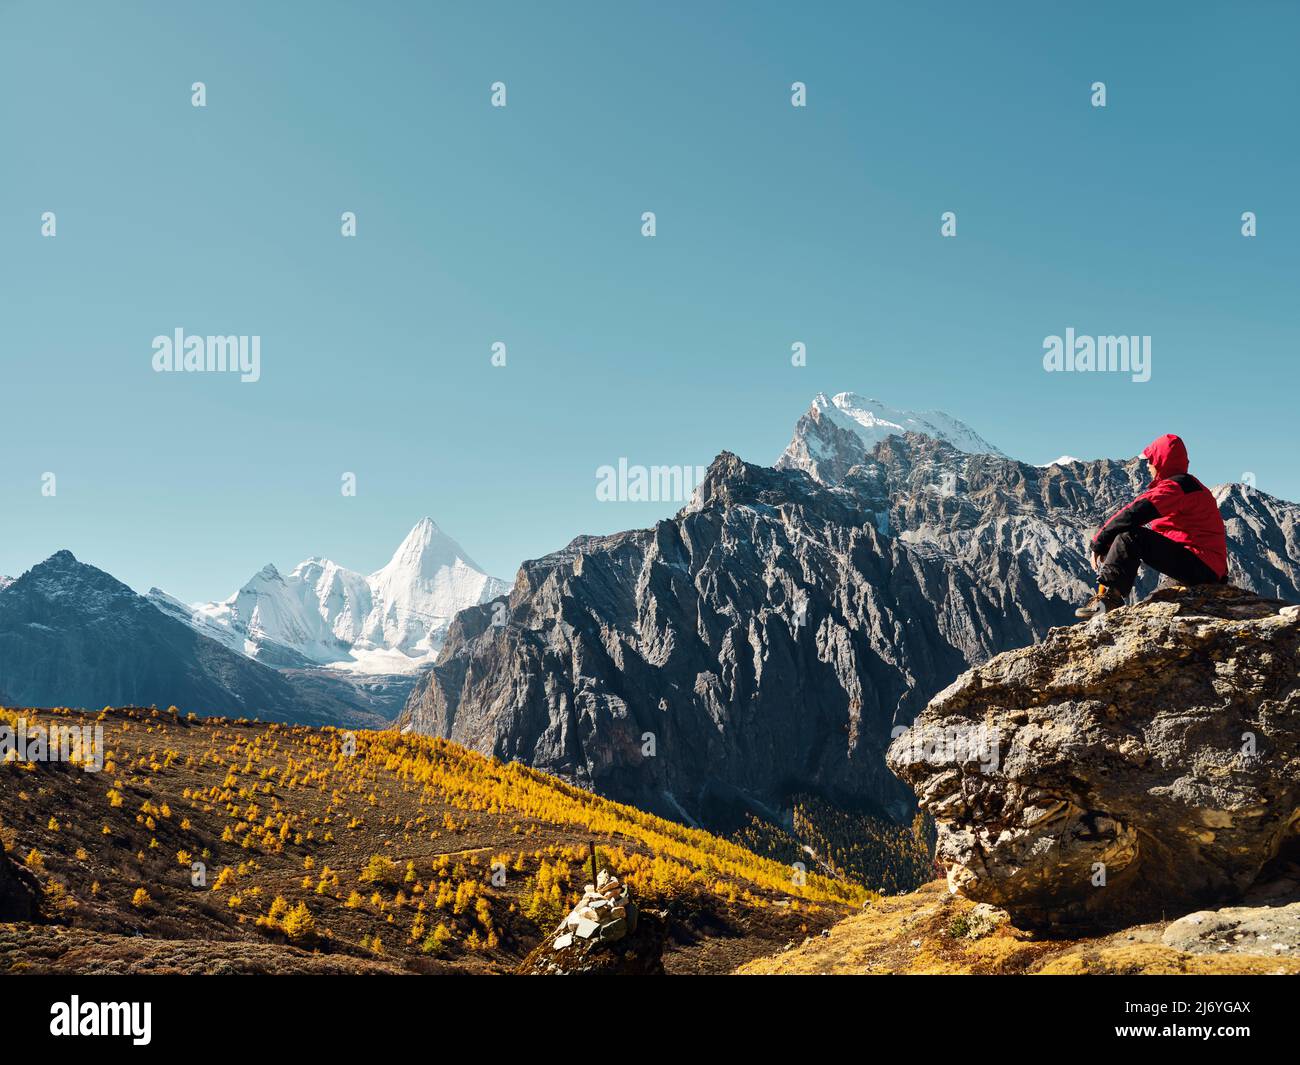 Uomo asiatico seduto in cima alla roccia guardando Yangmaiyong (o Jampayang in tibetano) picco di montagna in lontananza in Yading, Daocheng County, Sichuan Pr Foto Stock